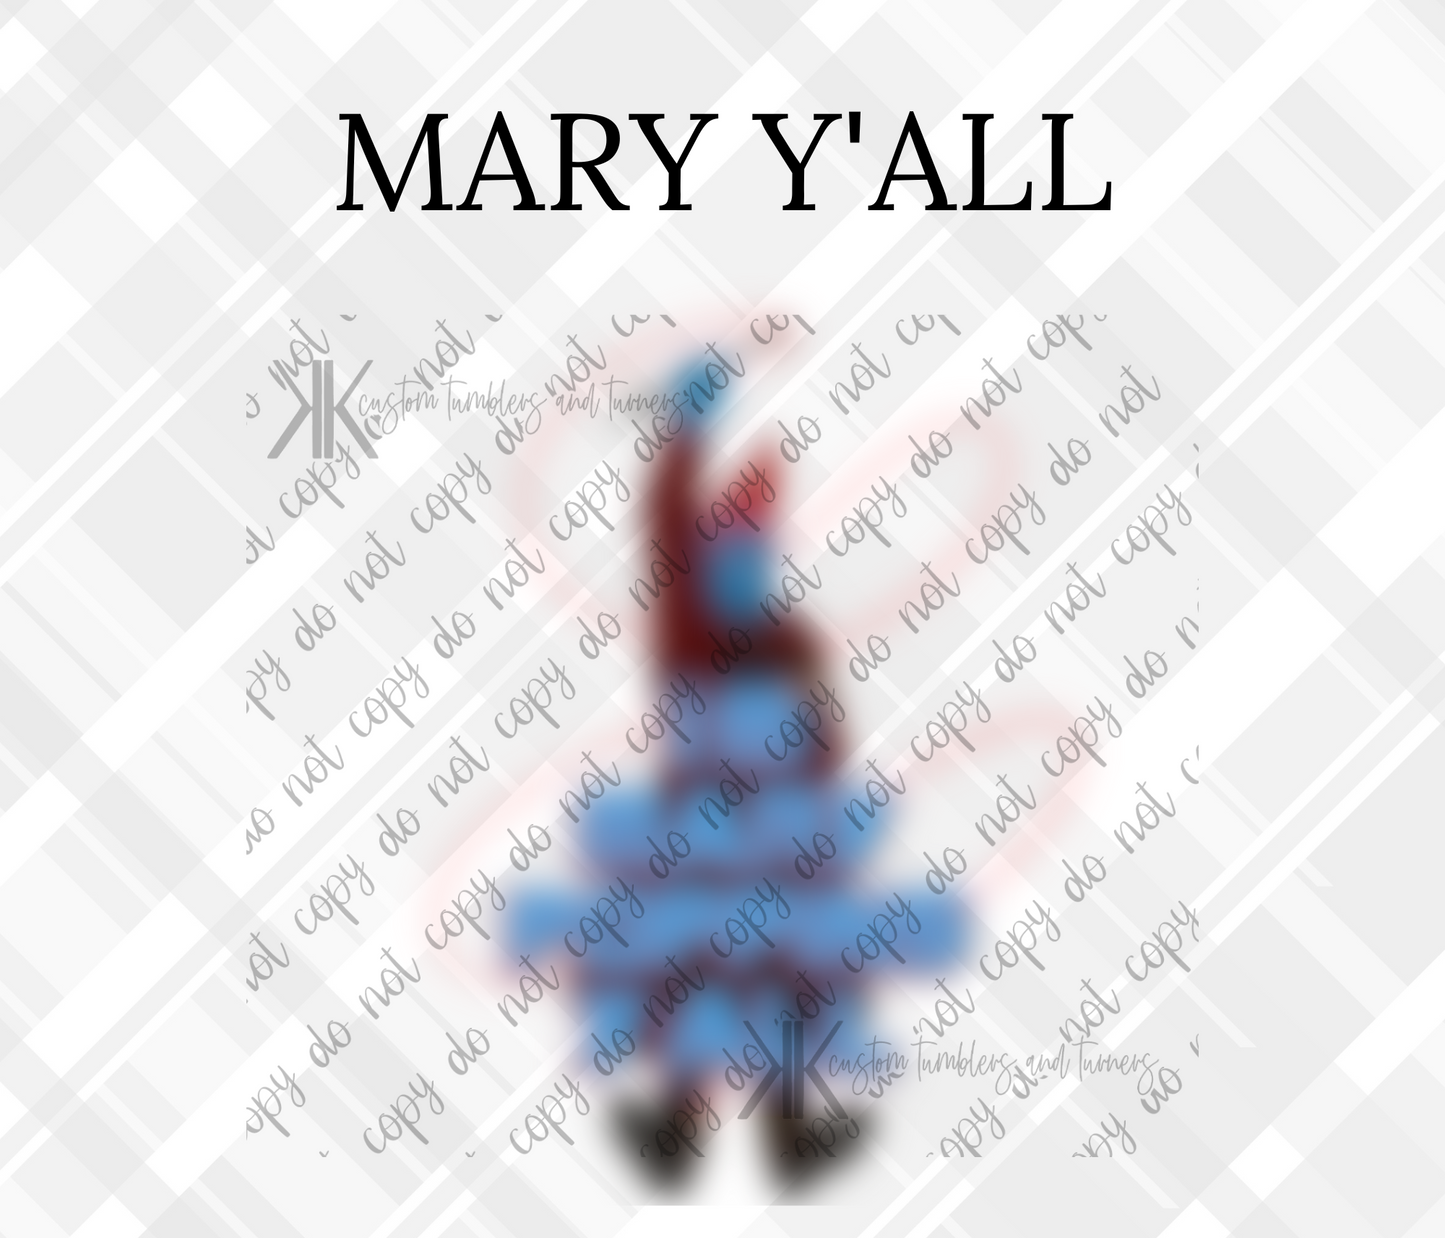 MARY Y'ALL